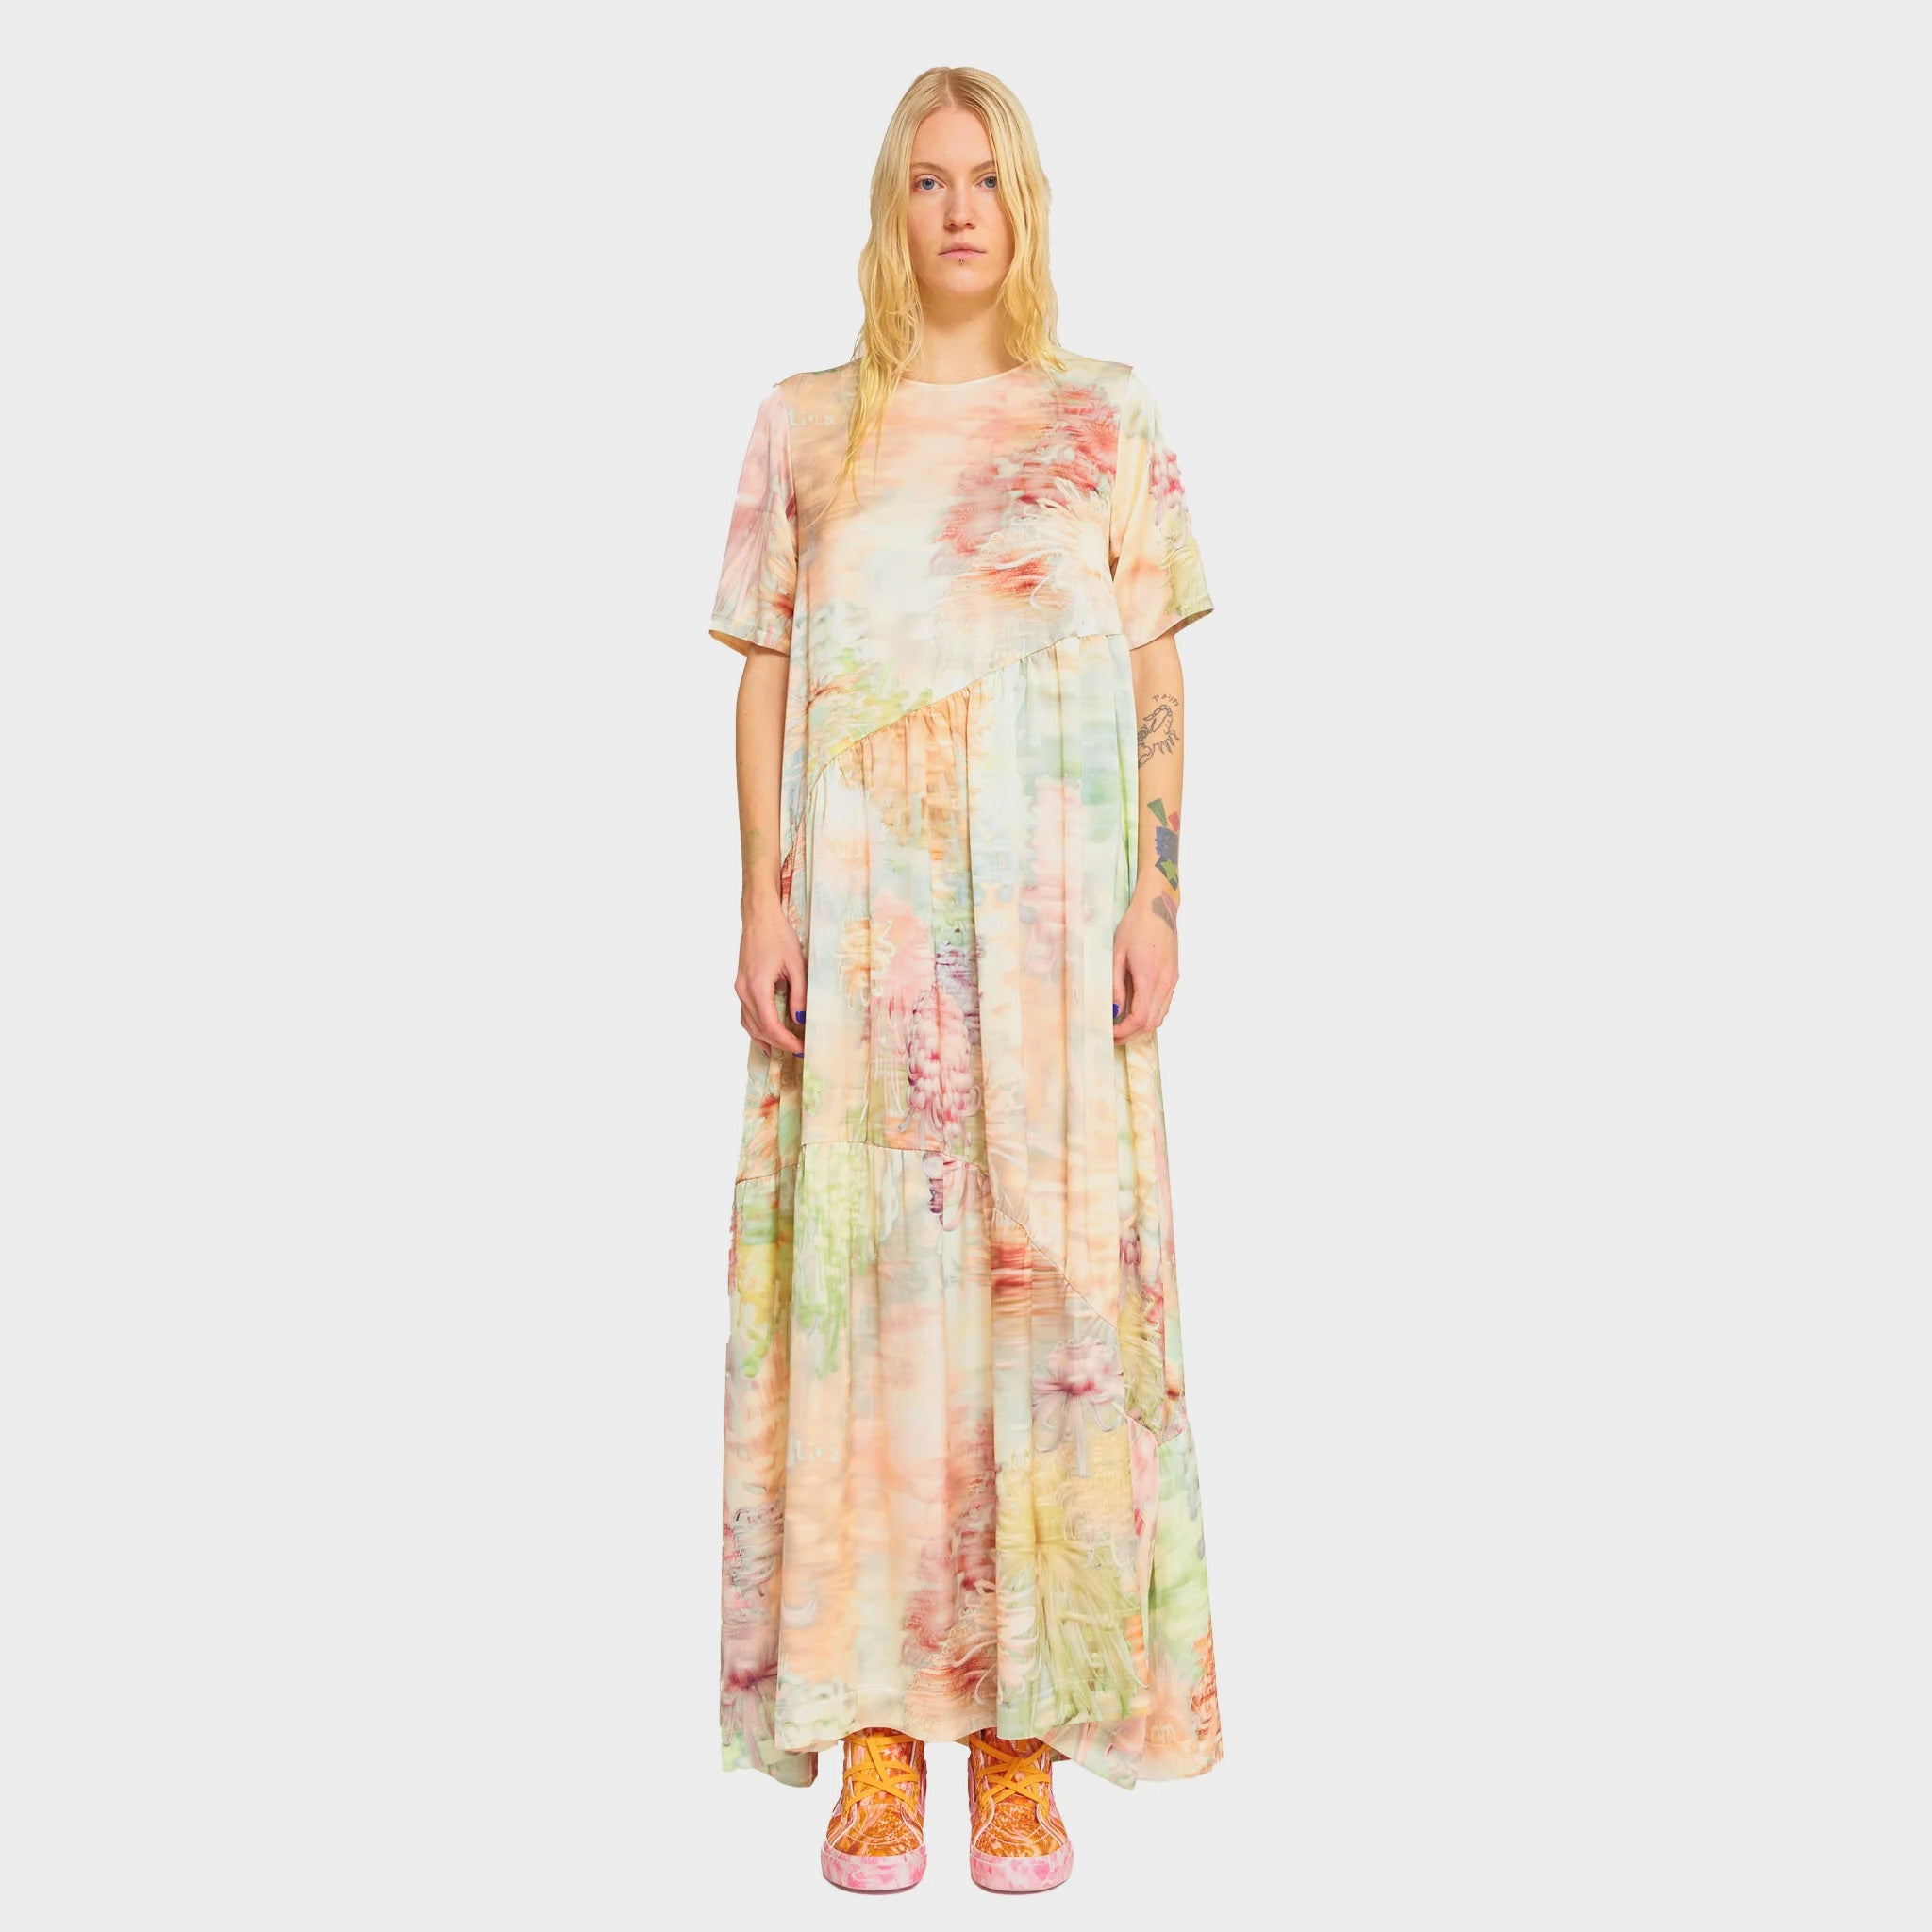 Full body photo of model wearing the Ritual Dress - Light Chrysanthemum.